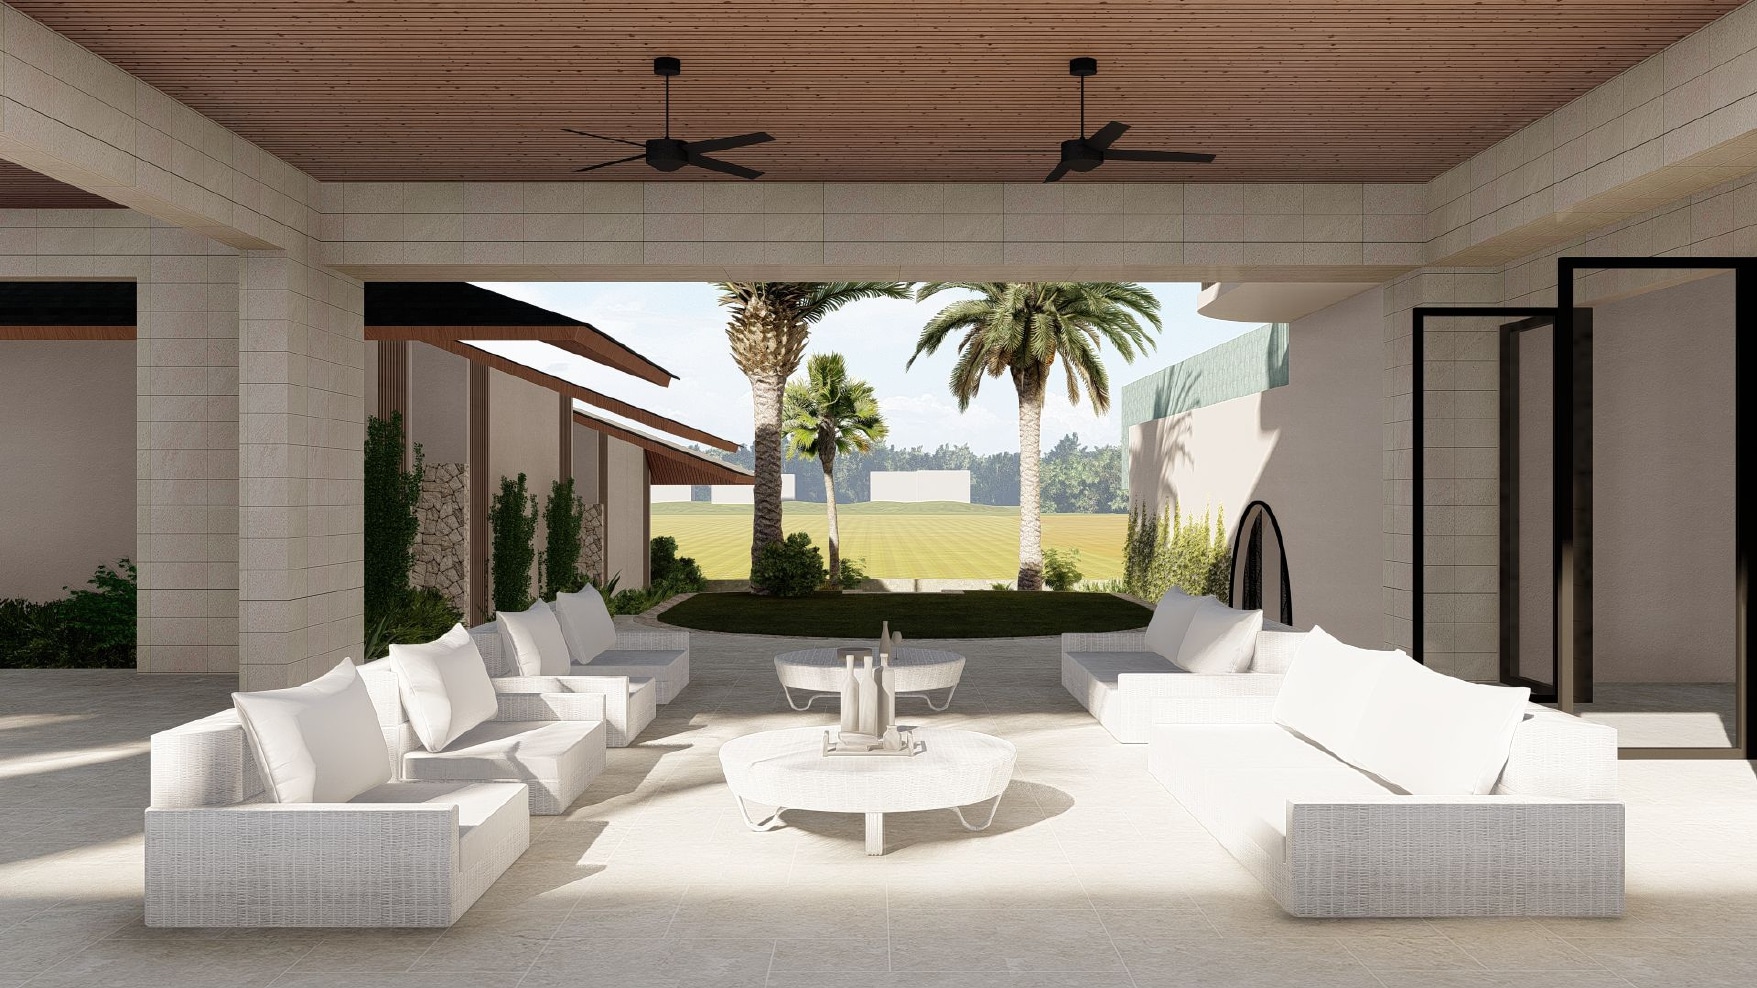 Design Assembly - Berawa 15 Villa - Bali Architect - Interior Design - Bali Villa - Open Living Room - Terrace - Wall Facade